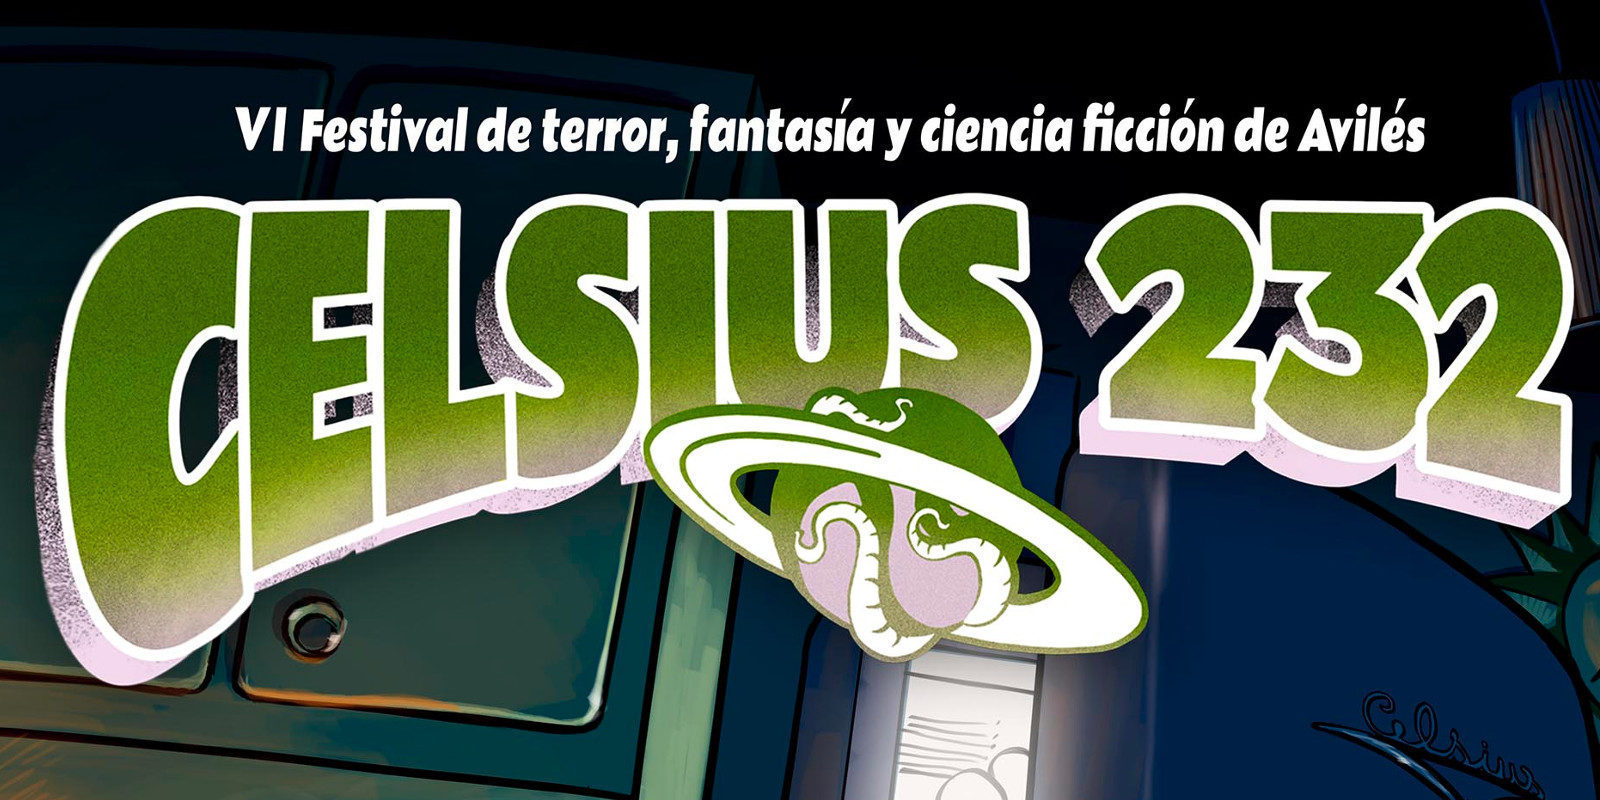 Celsius 232: lo que no te puedes perder del festival de literatura fantástica de avilés